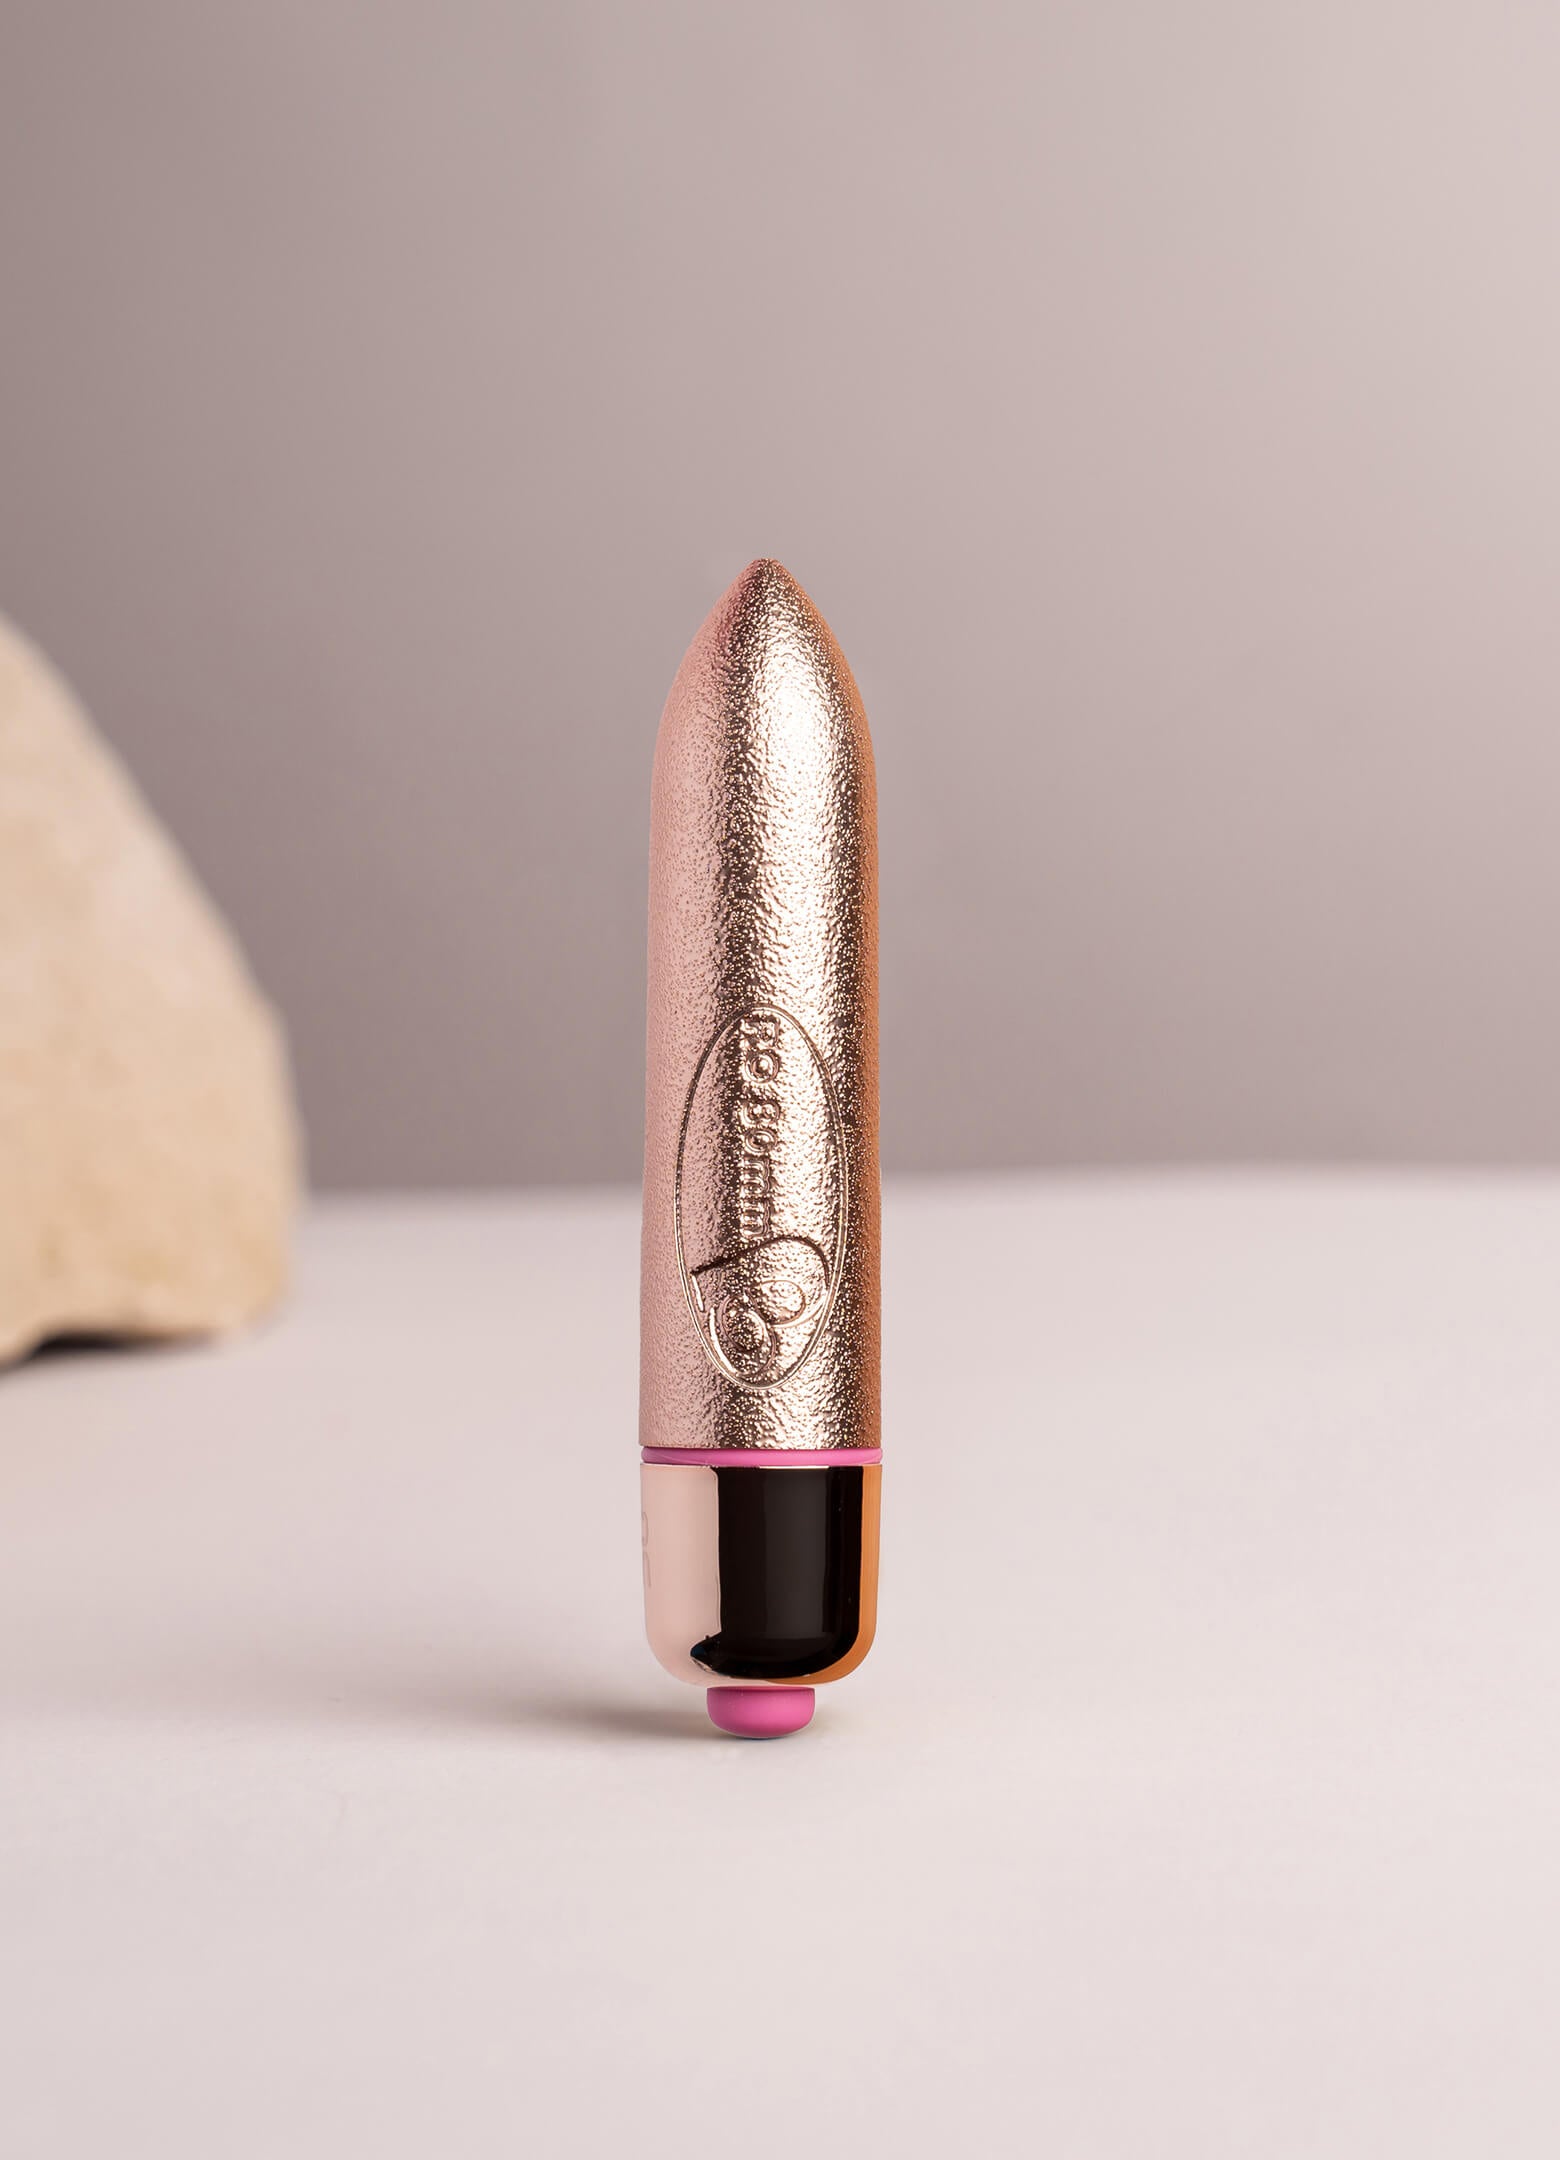 Small bullet vibrator in rose gold glitter effect.